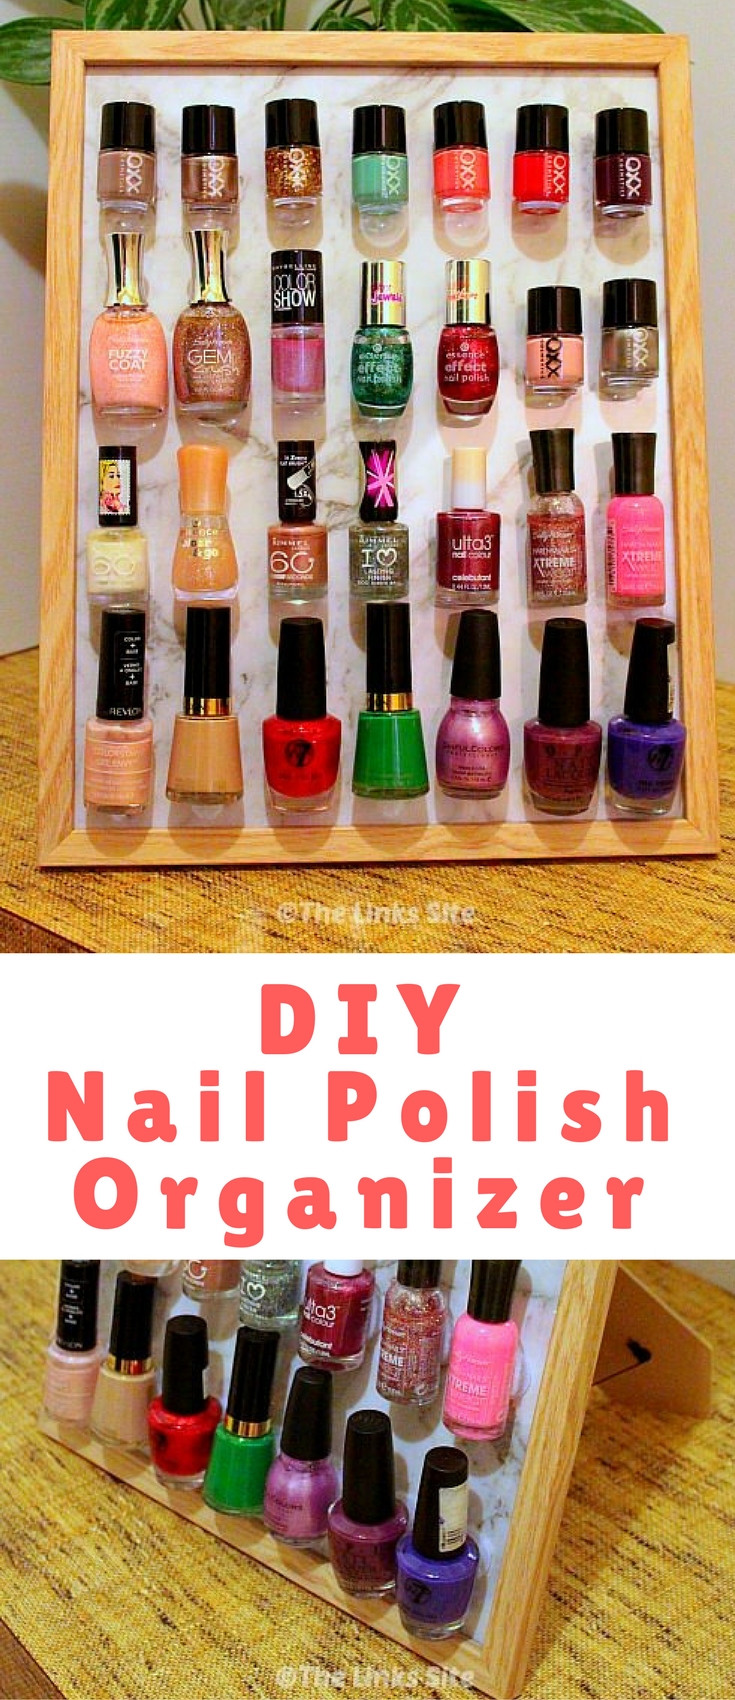 DIY Nail Polish Organizer
 DIY Nail Polish Organizer Using a Frame Blogger